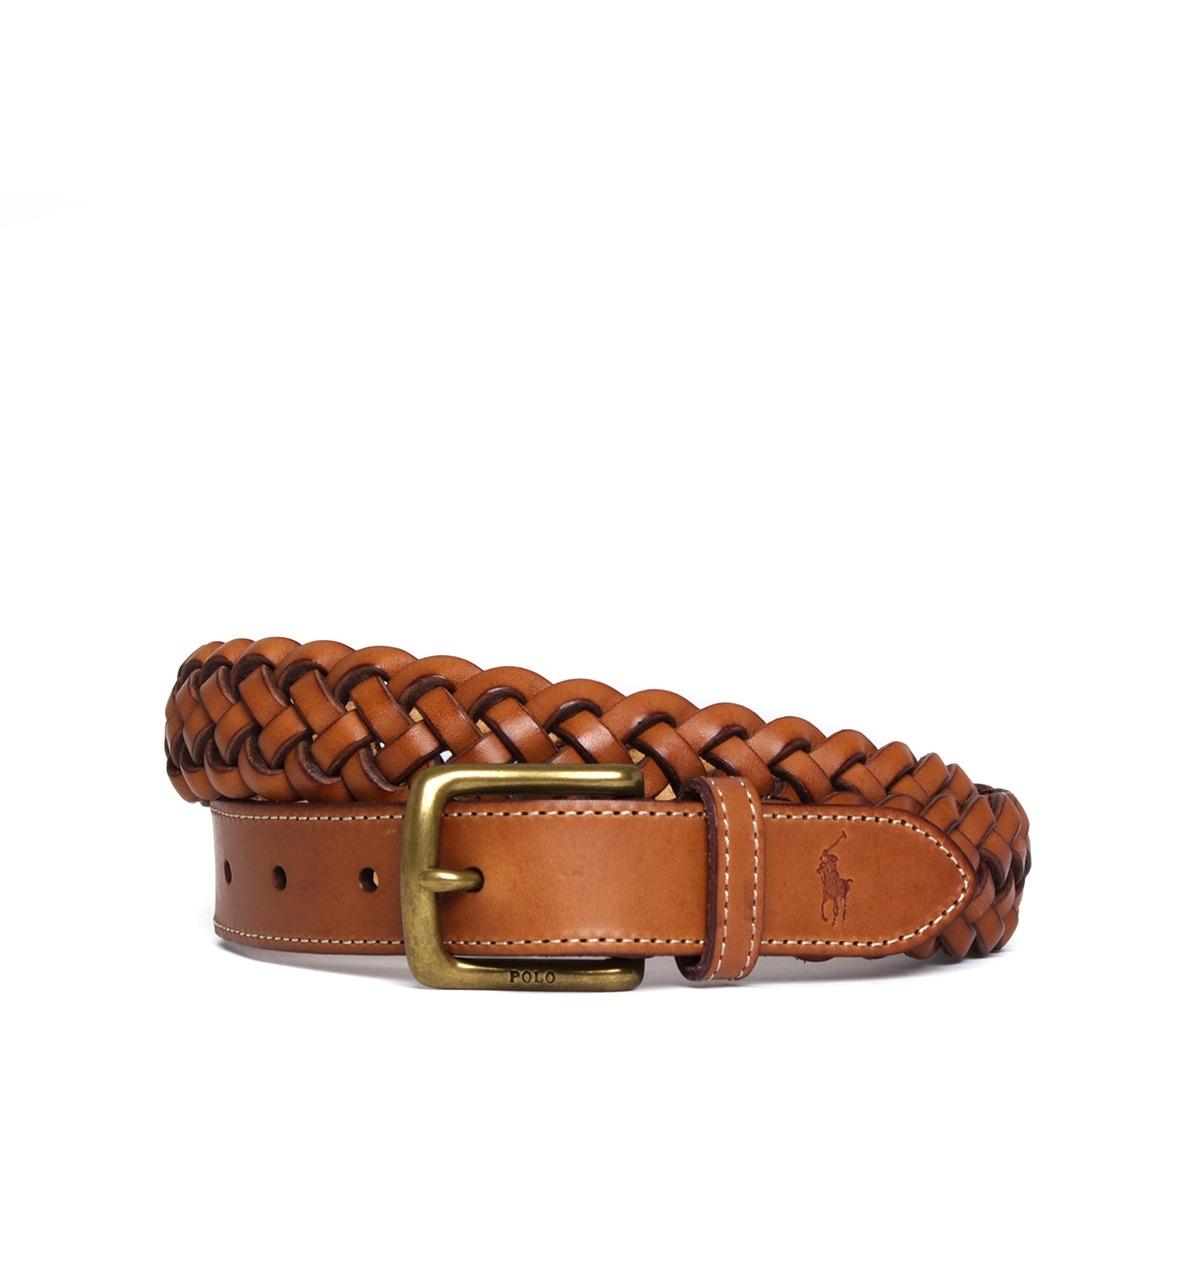 Polo Ralph Lauren Braid Brown Leather Belt in Brown for Men - Lyst